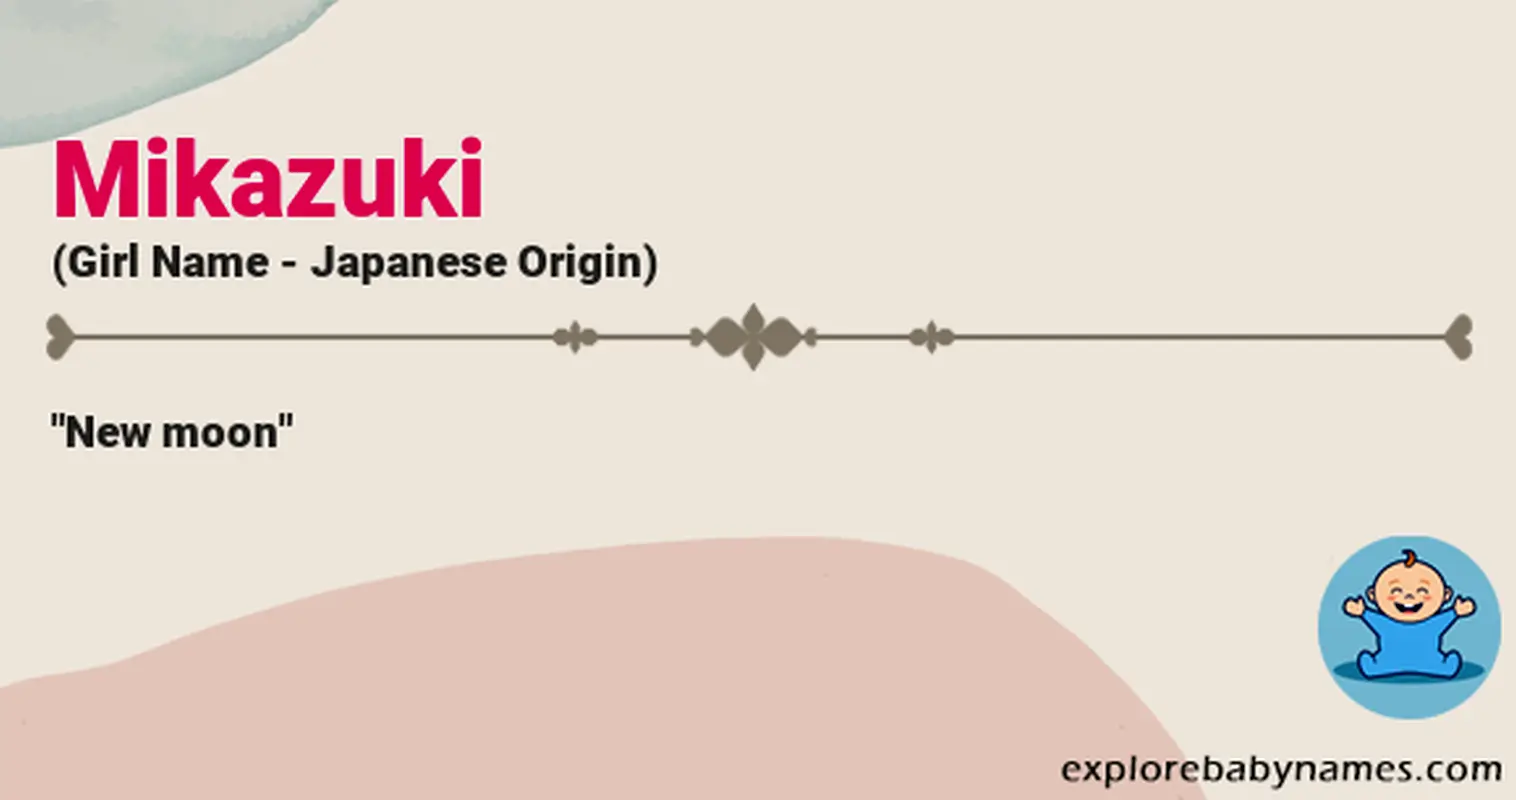 Meaning of Mikazuki